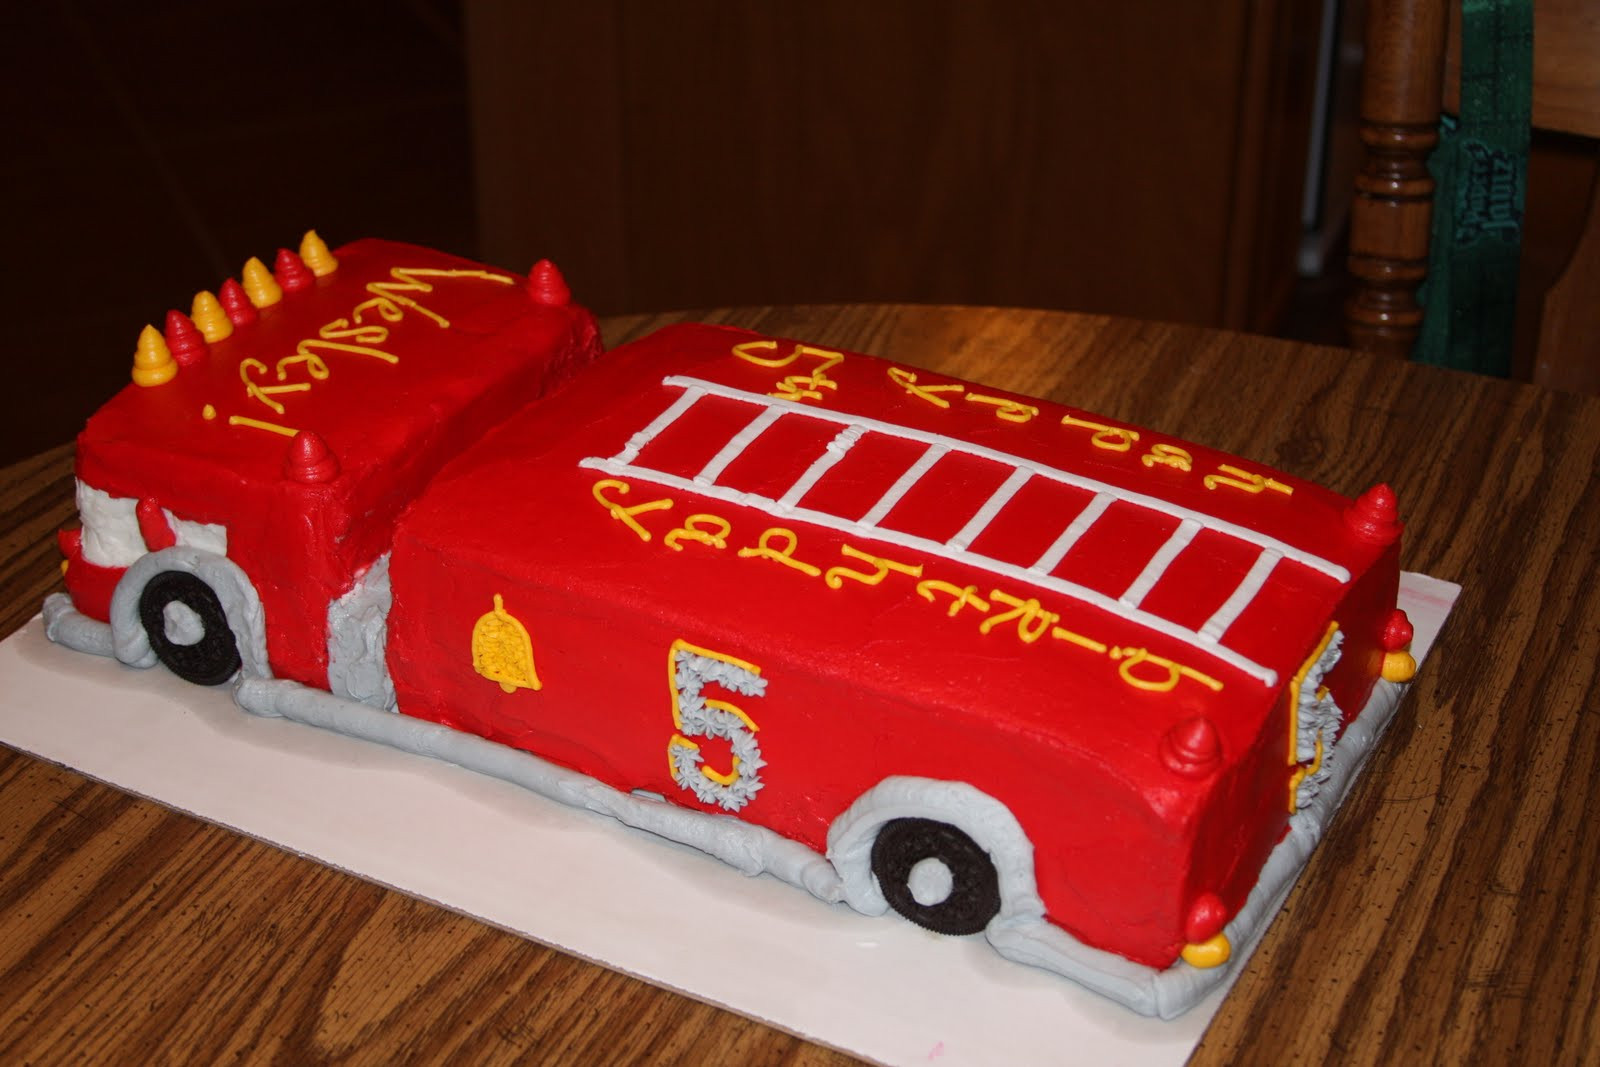 Firetruck Birthday Cake
 Can I Make Your Cake Fire Truck Birthday